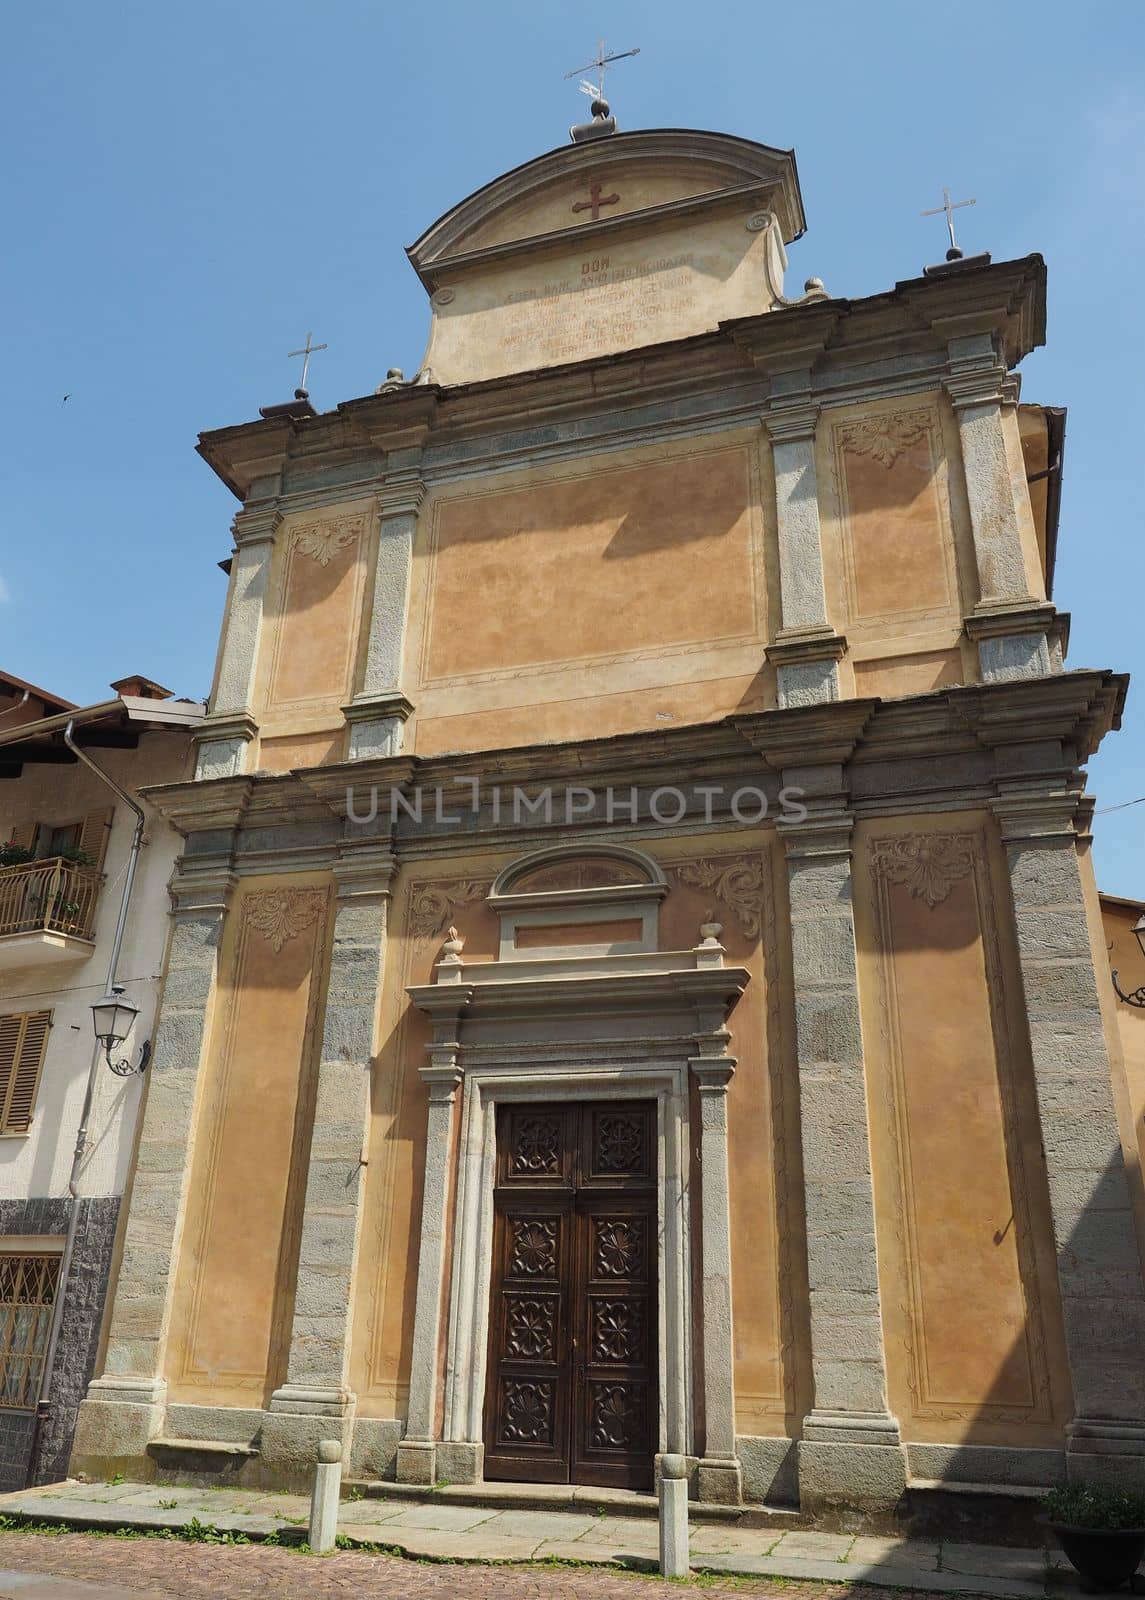 Corio church in Canavese Piedmont region, Italy